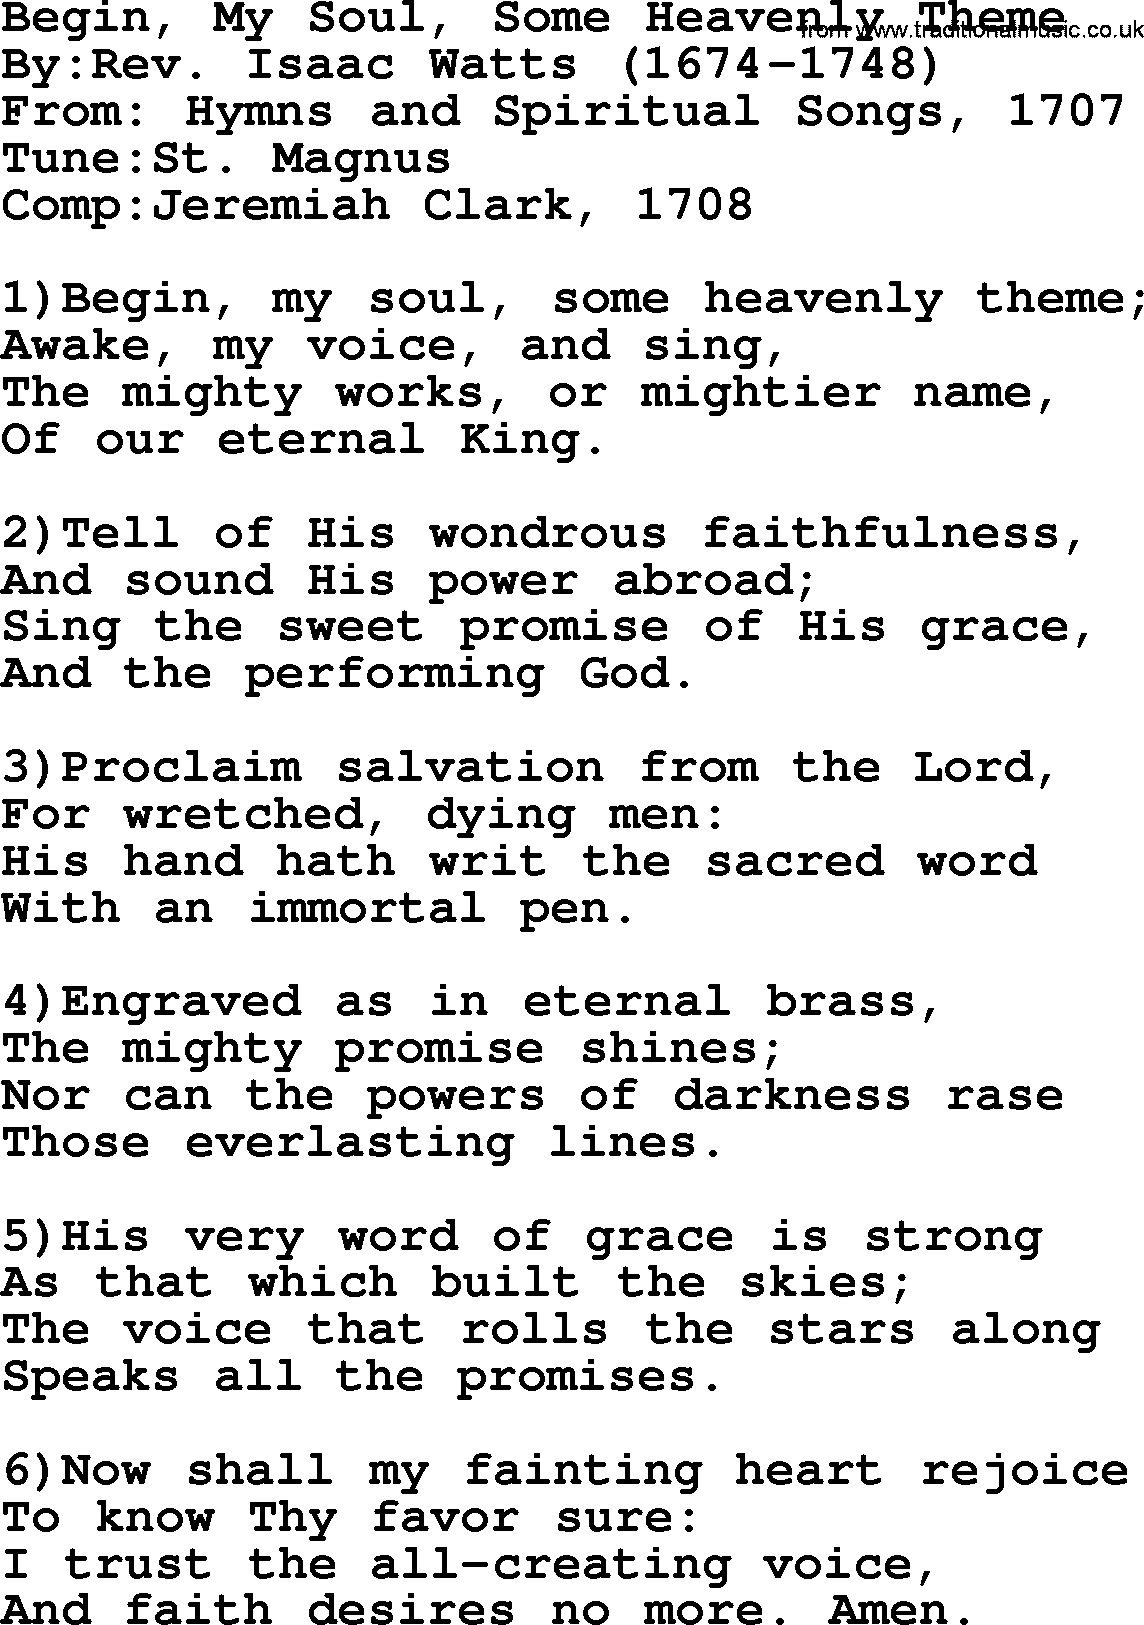 Methodist Hymn: Begin, My Soul, Some Heavenly Theme, lyrics